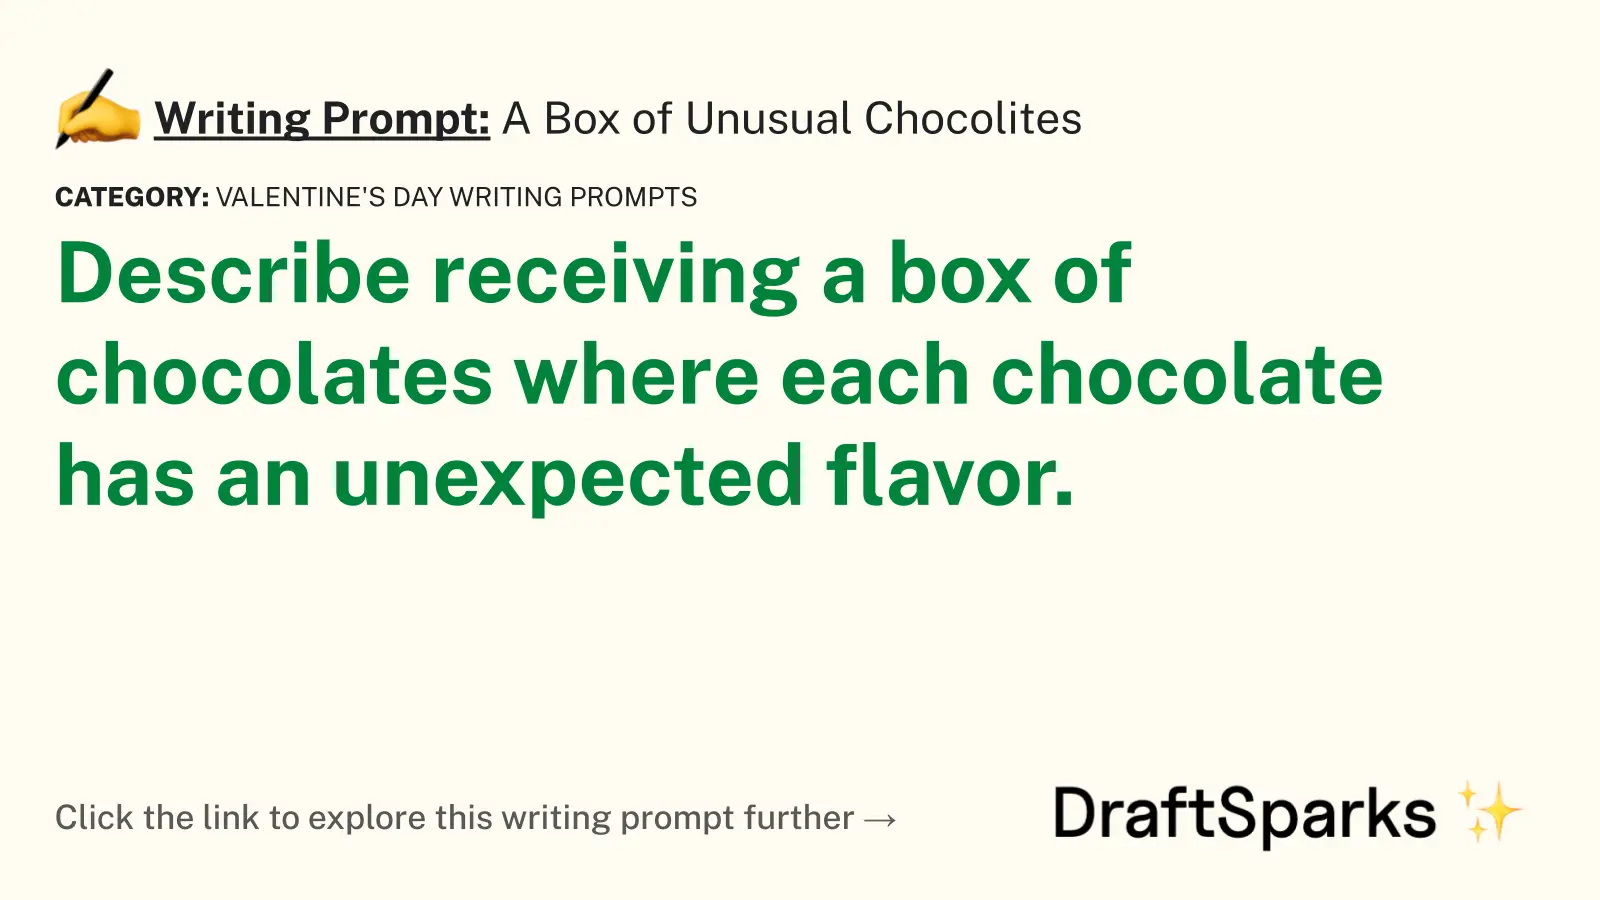 A Box of Unusual Chocolites